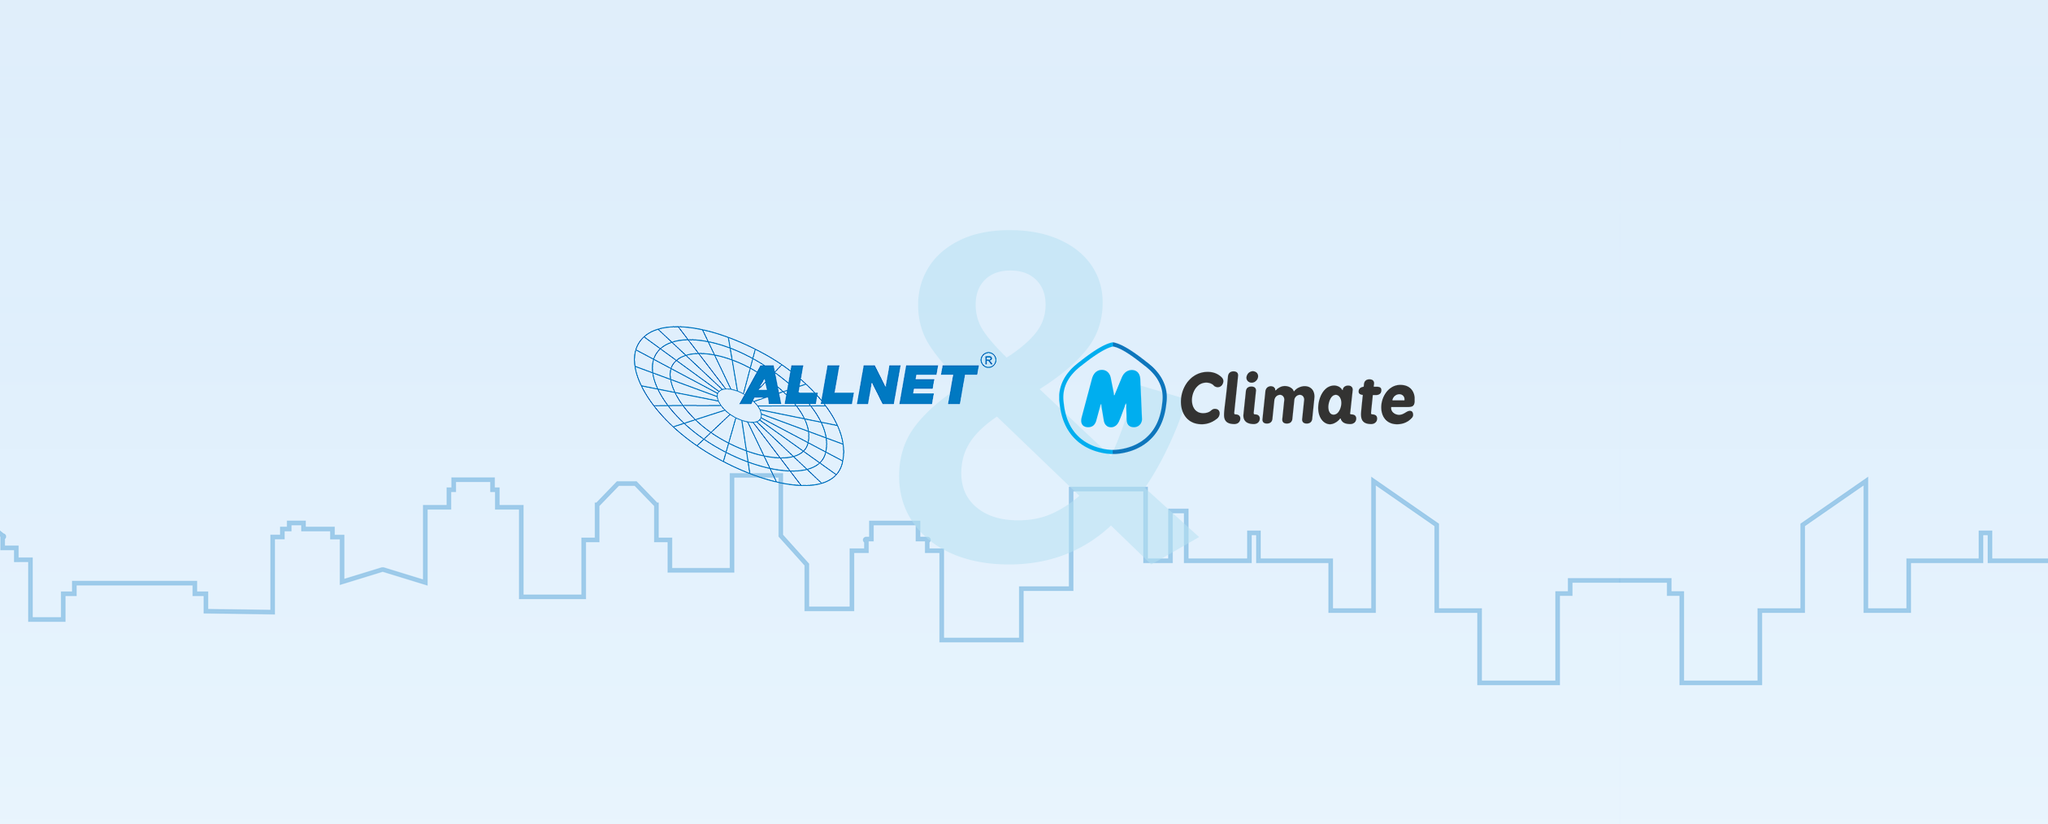 ALLNET and MClimate established a distribution partnership